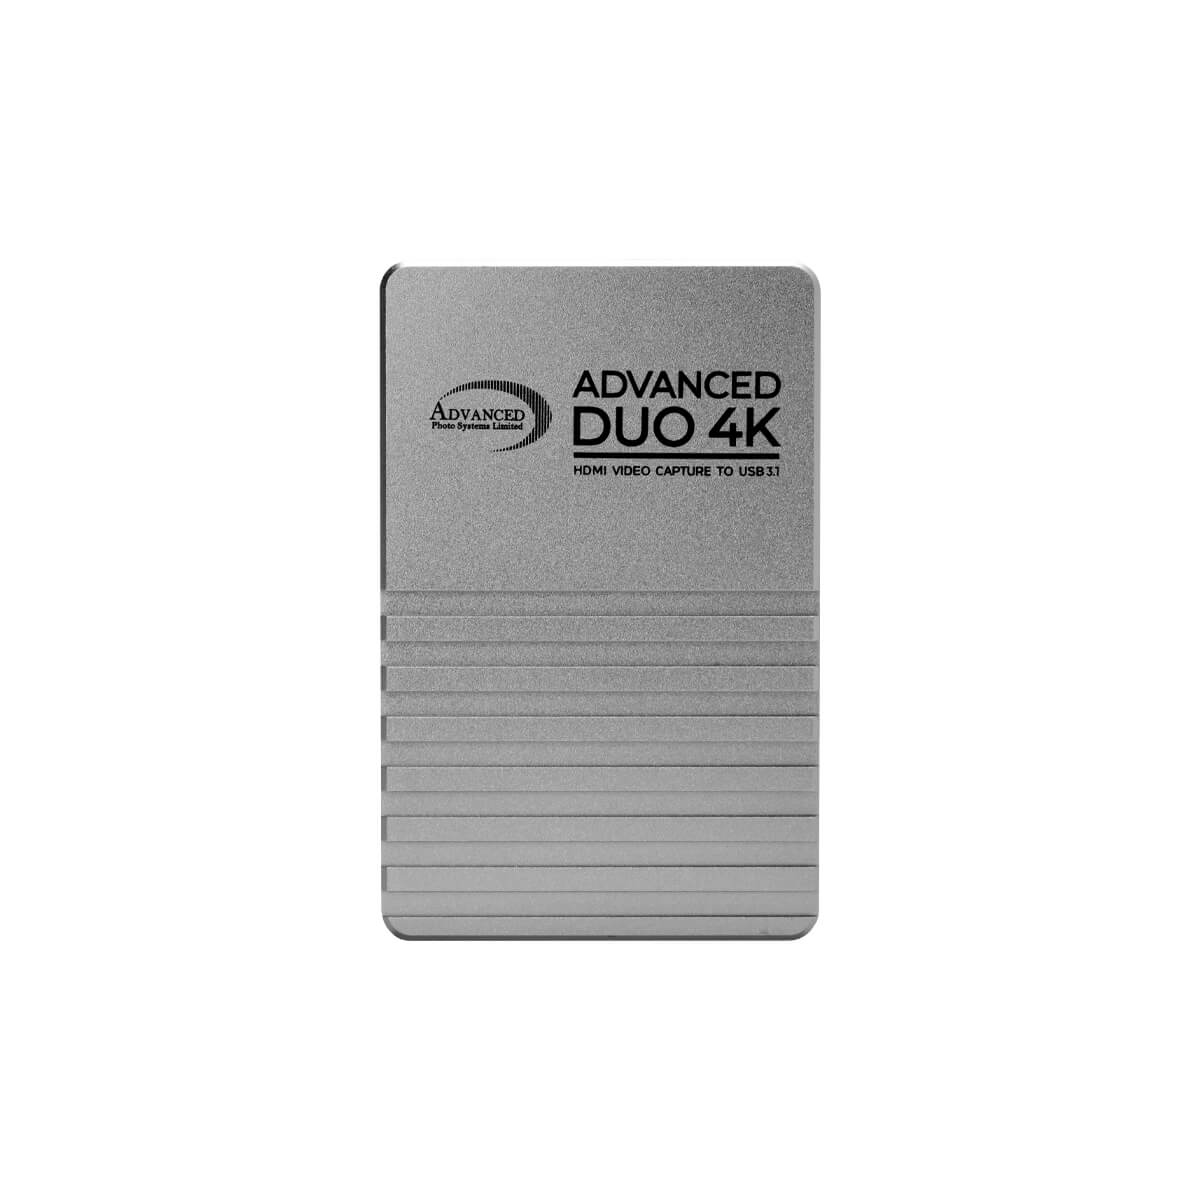 Advance Duo 4K USB3.1 Gen2 Card Capture